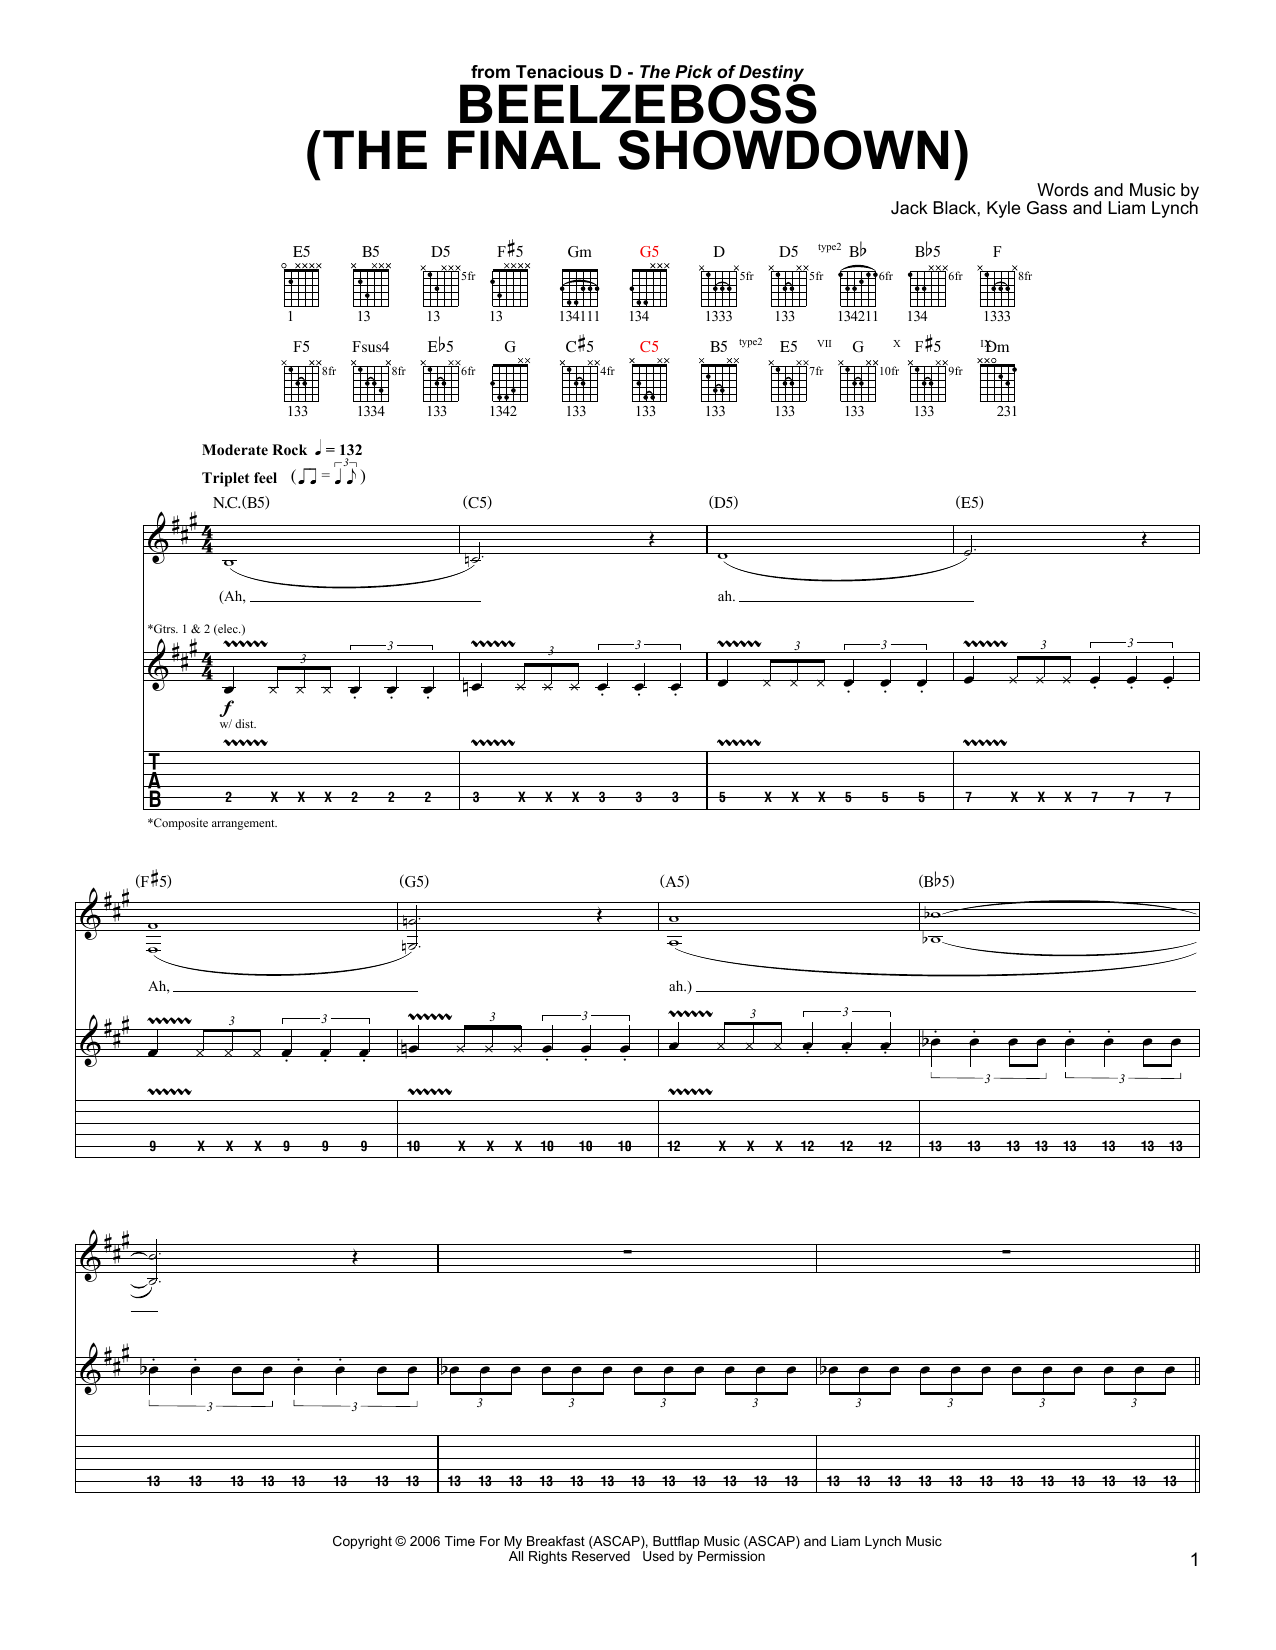 Tenacious D Beelzeboss (The Final Showdown) Sheet Music Notes & Chords for Guitar Tab - Download or Print PDF